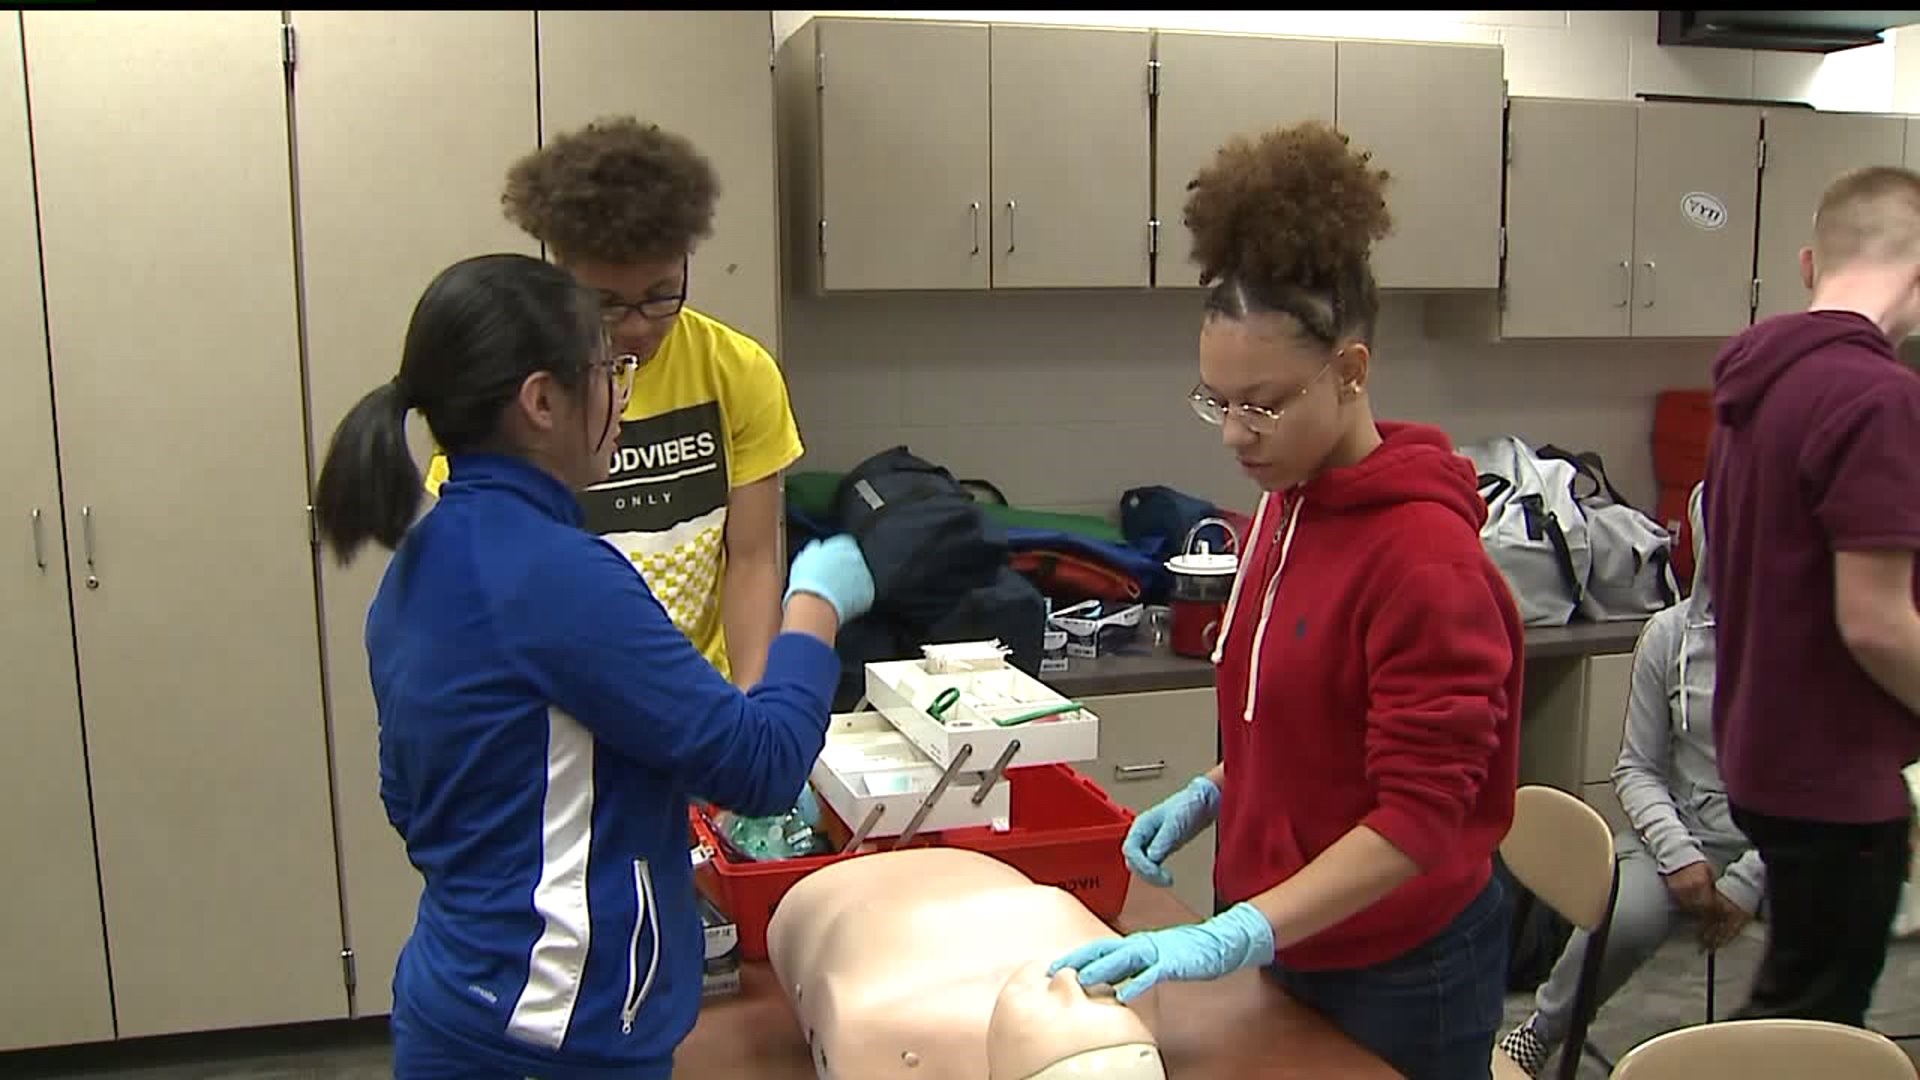 HSFF: Teaching students into public safety, already saving lives at William Penn Senior High School